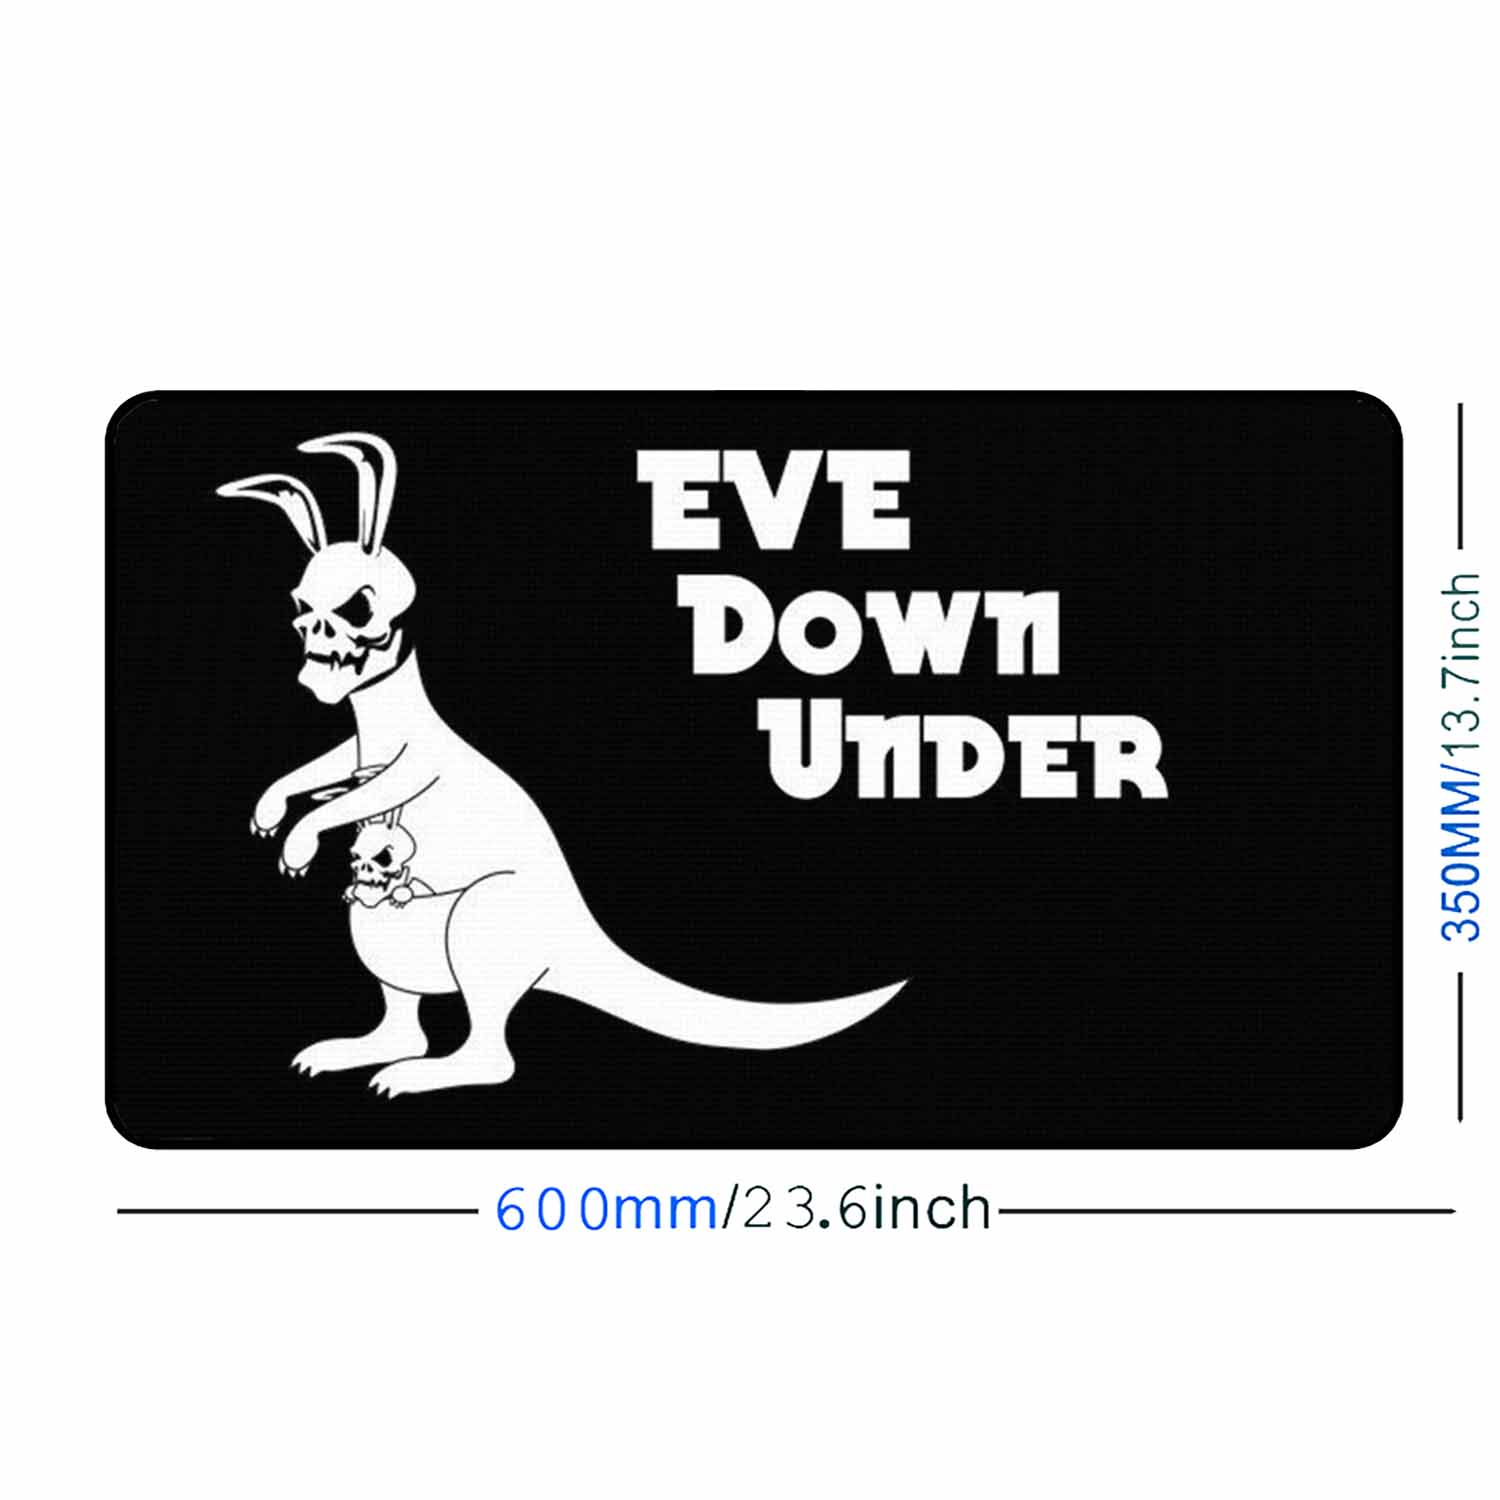 Eve Downunder Mouse Pad  Desk Pad freeshipping - garageartaustralia